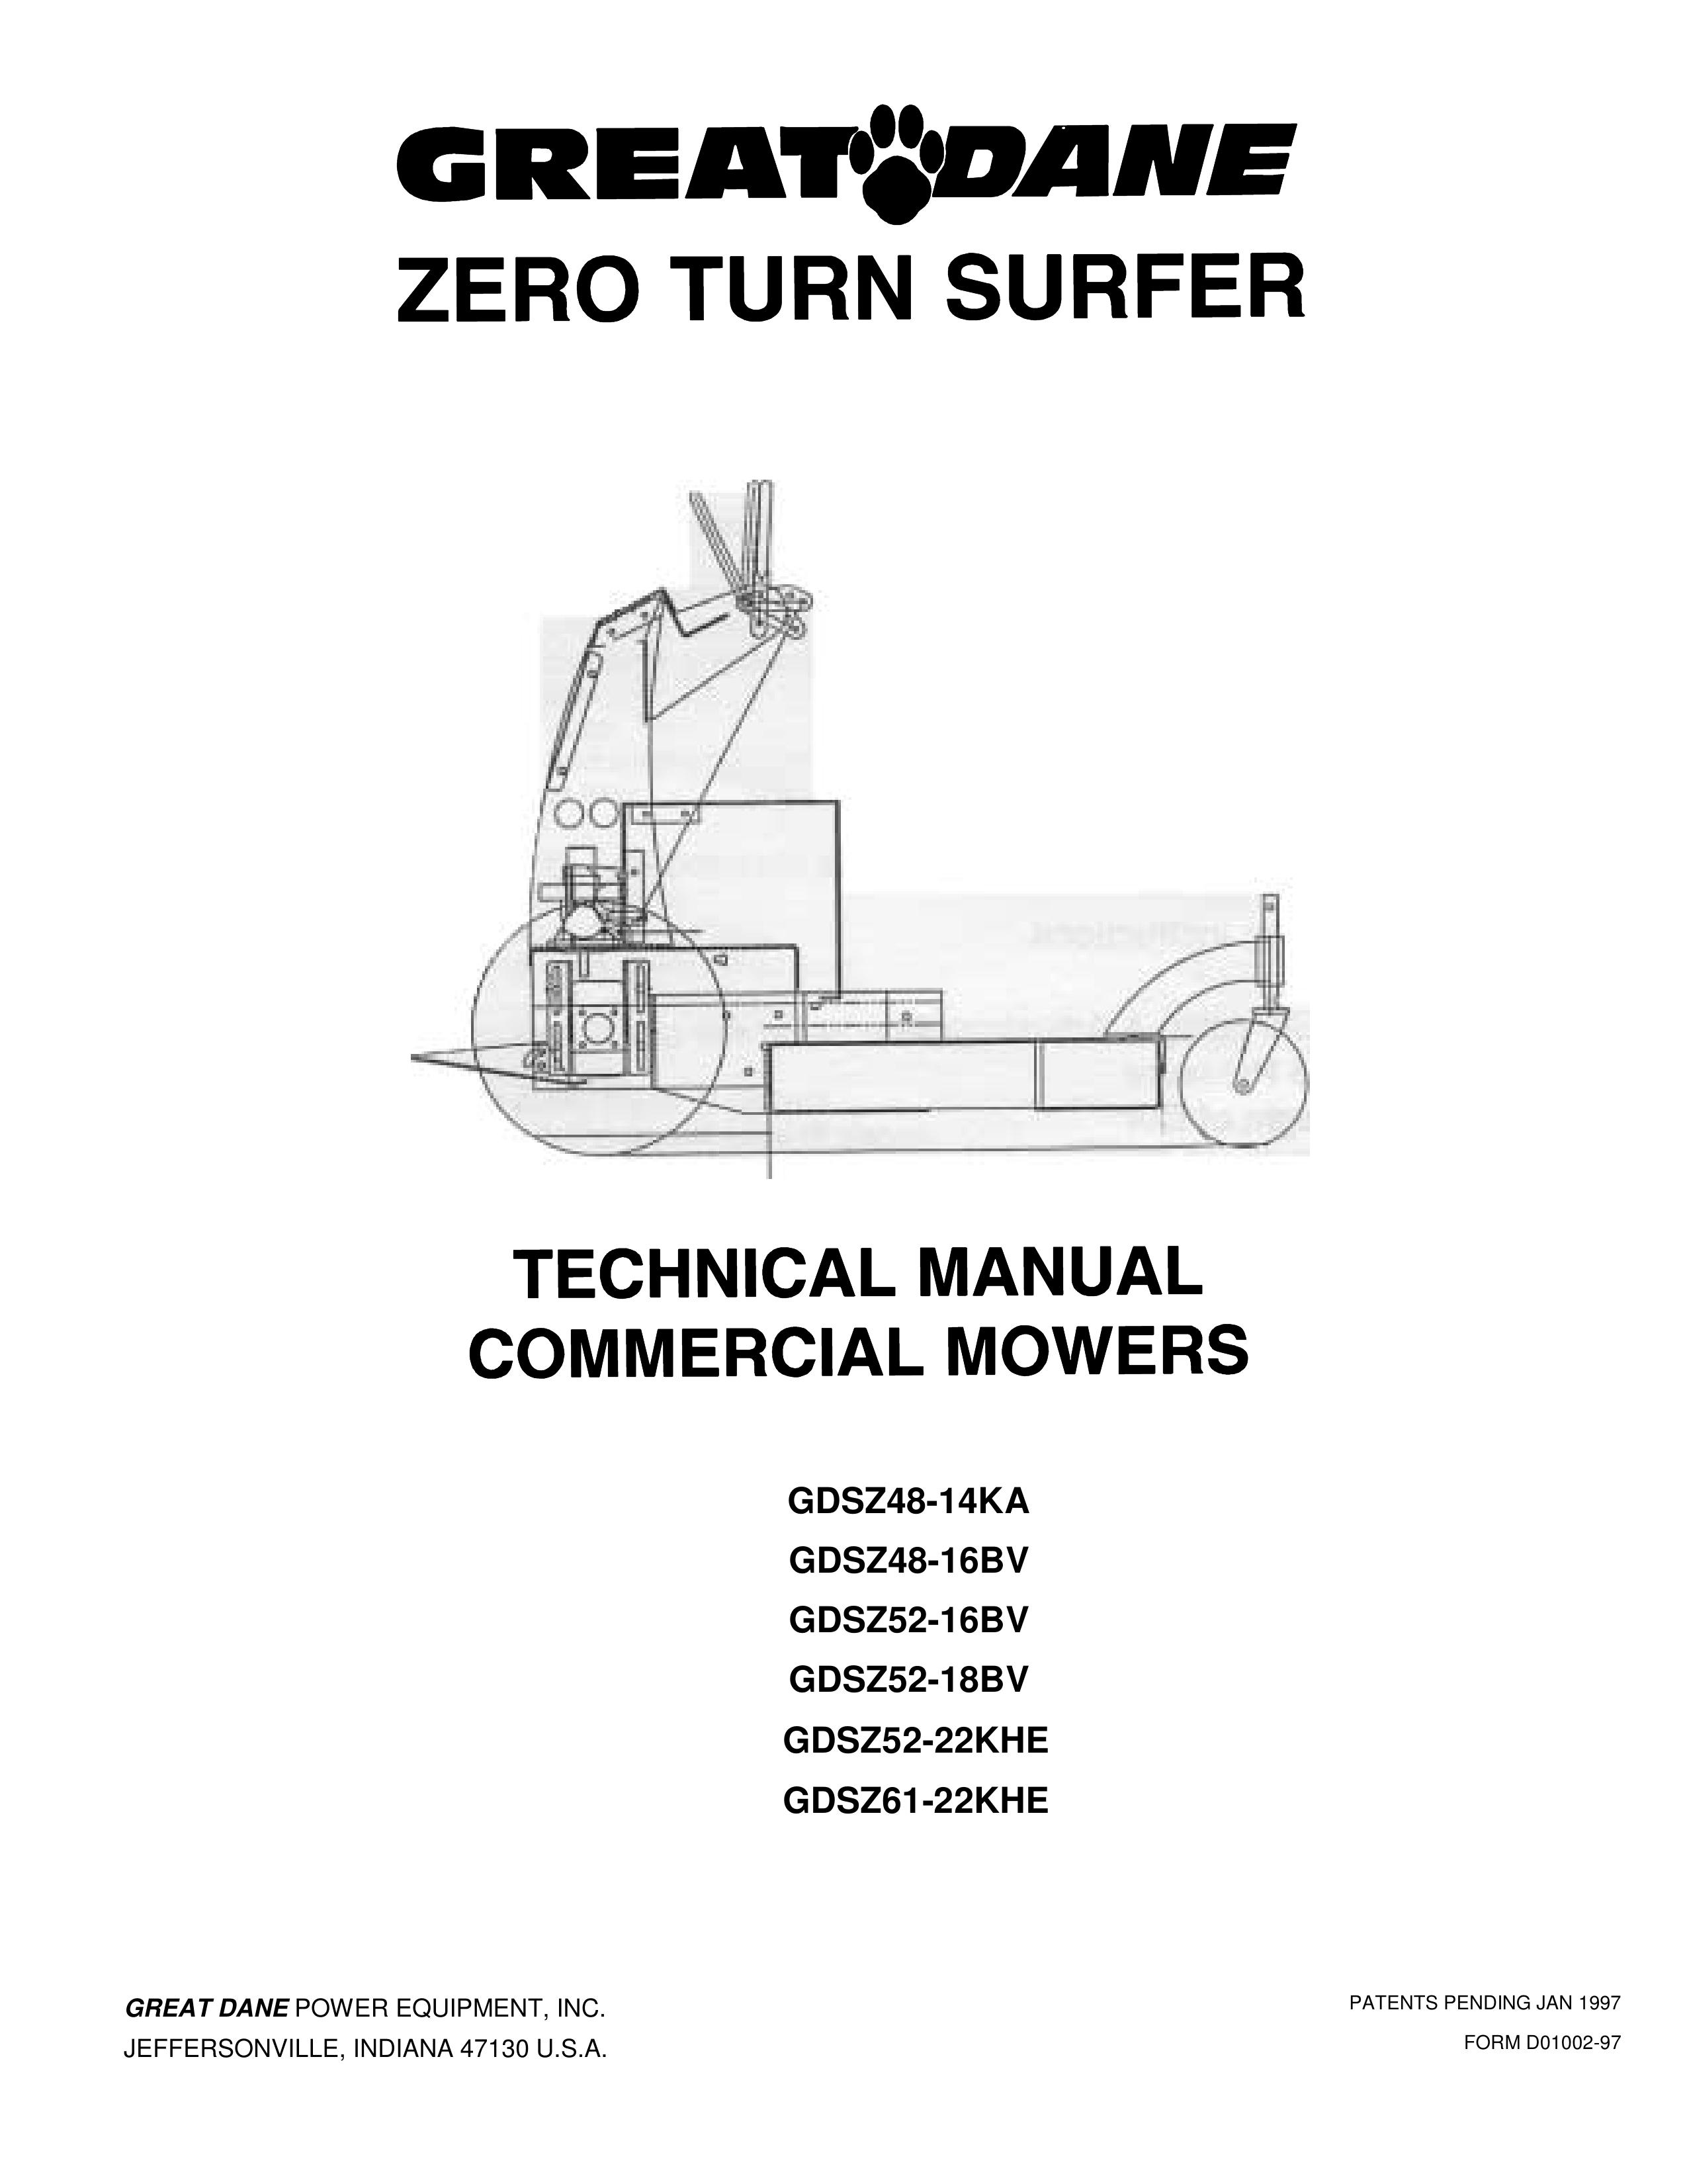 Great Dane GDSZ48-16BV Lawn Mower User Manual